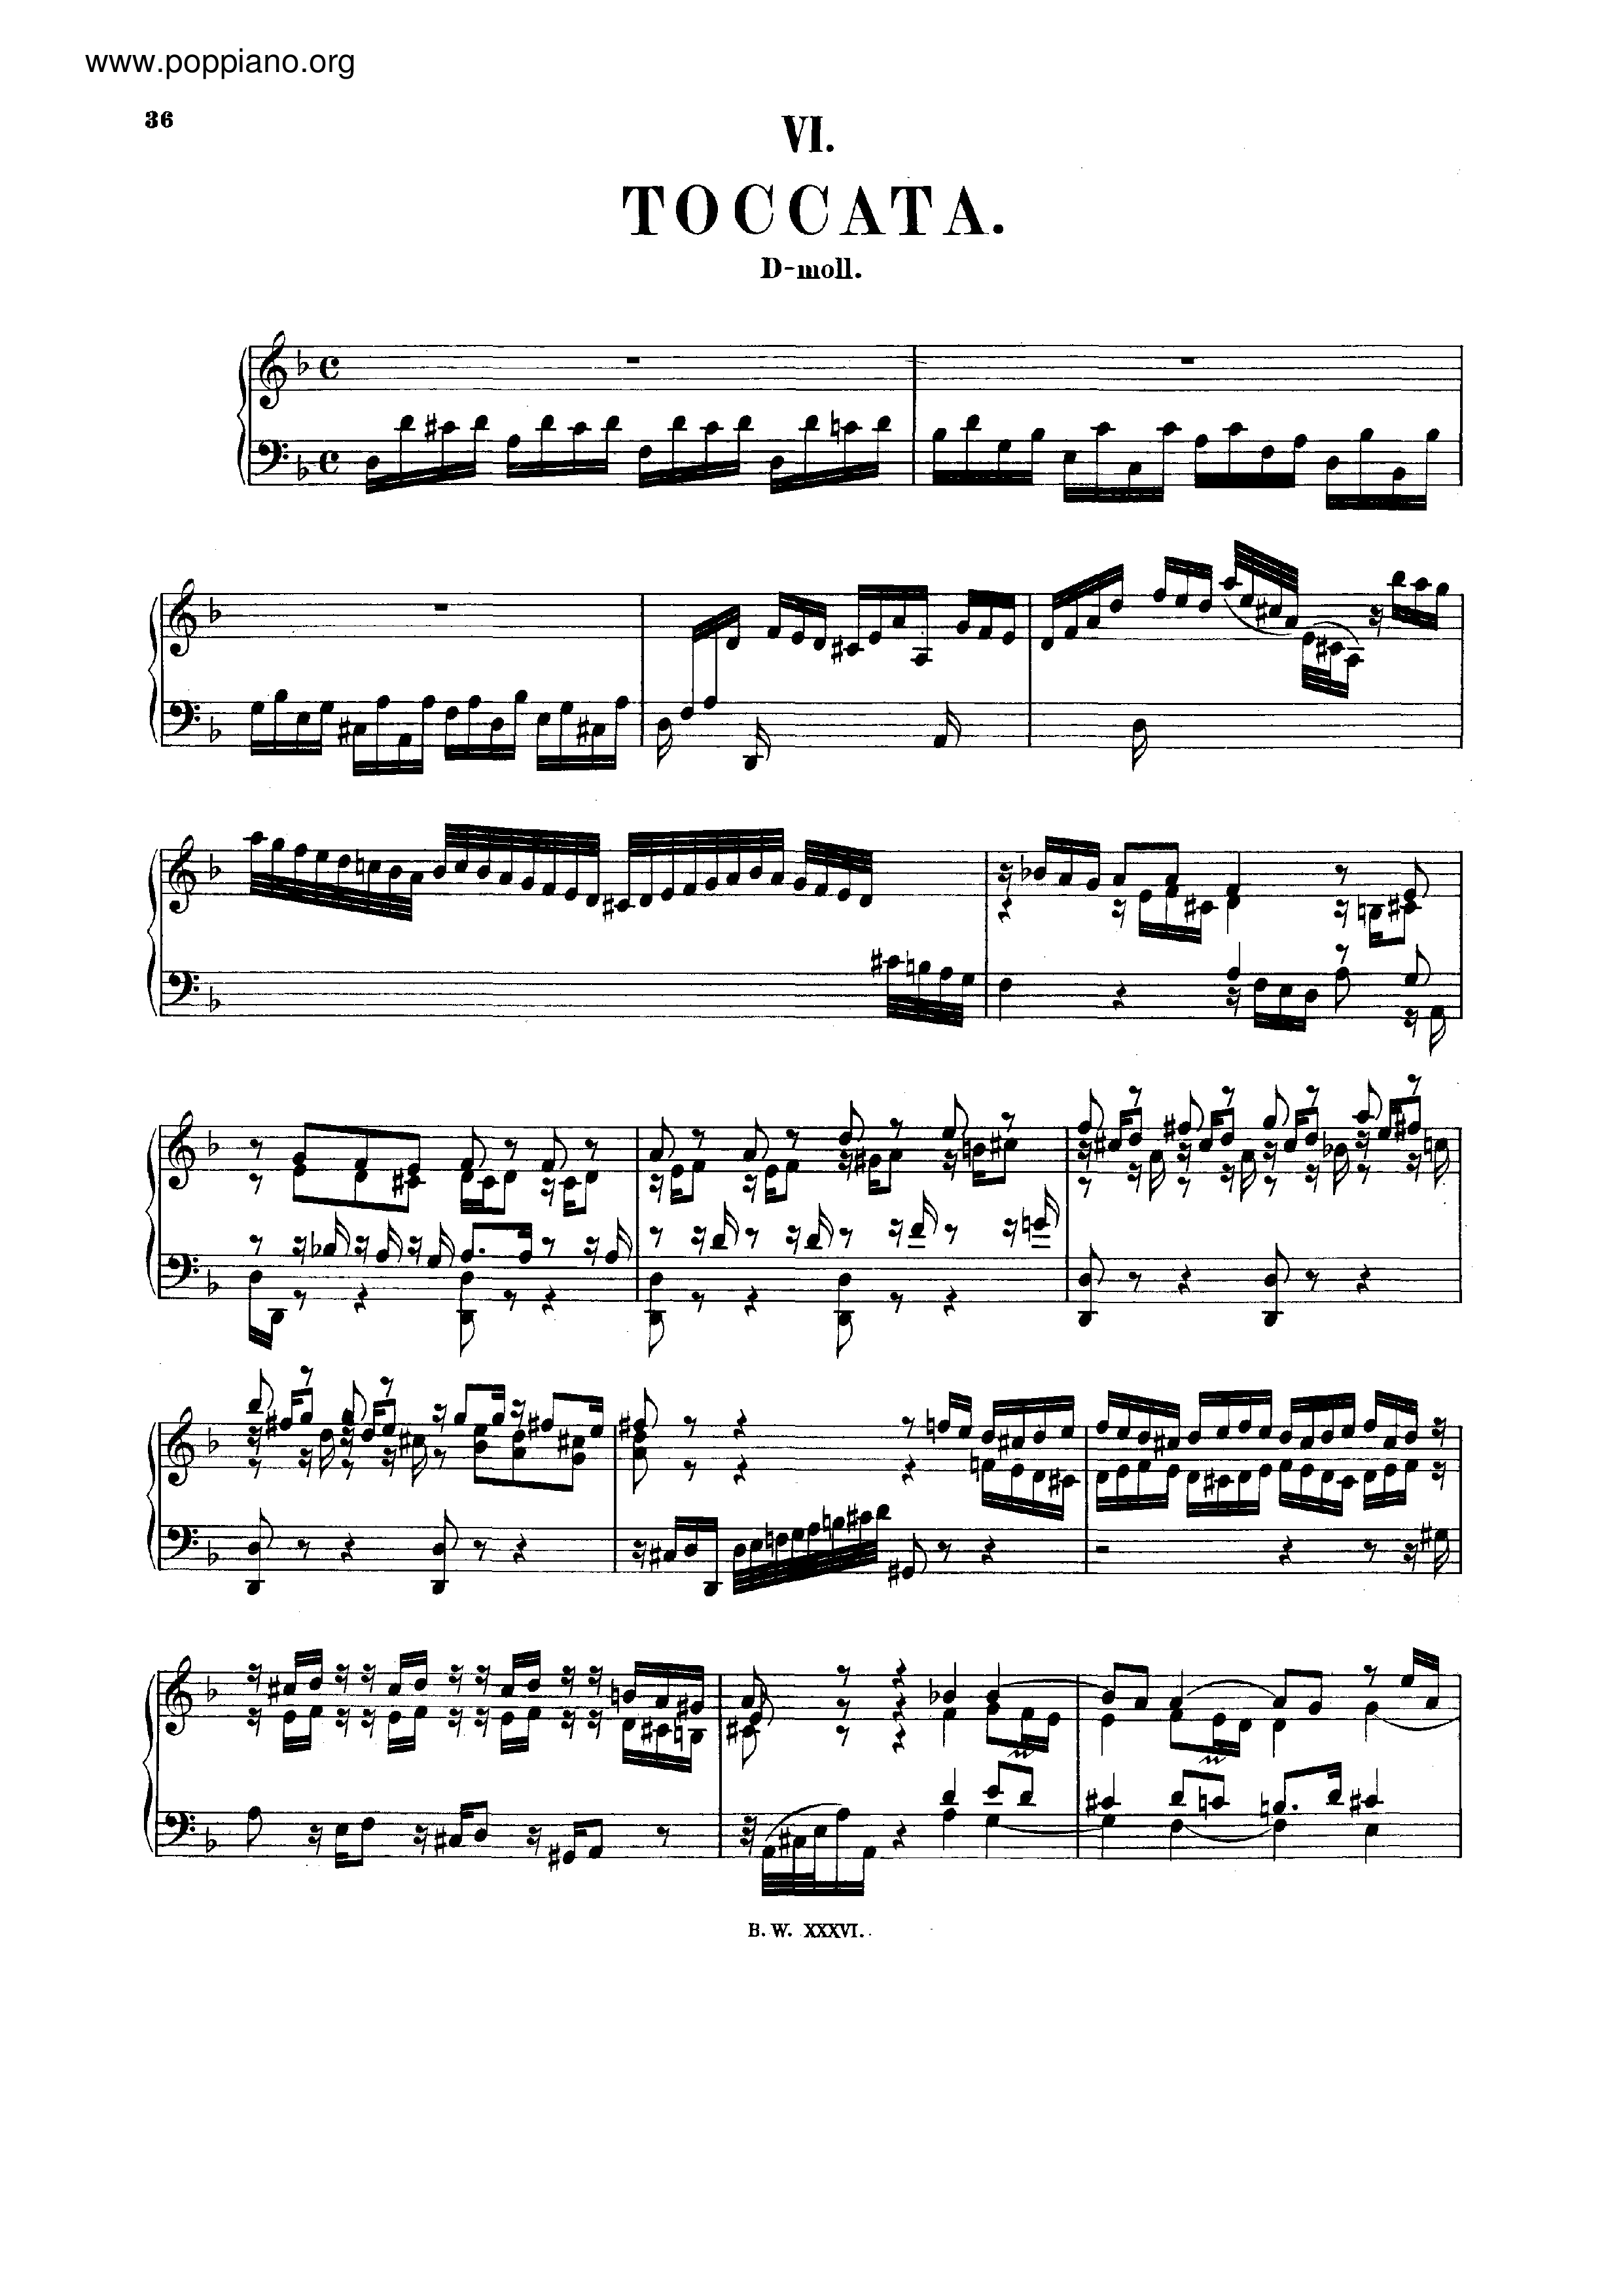 Toccata in D minor, BWV 913琴谱